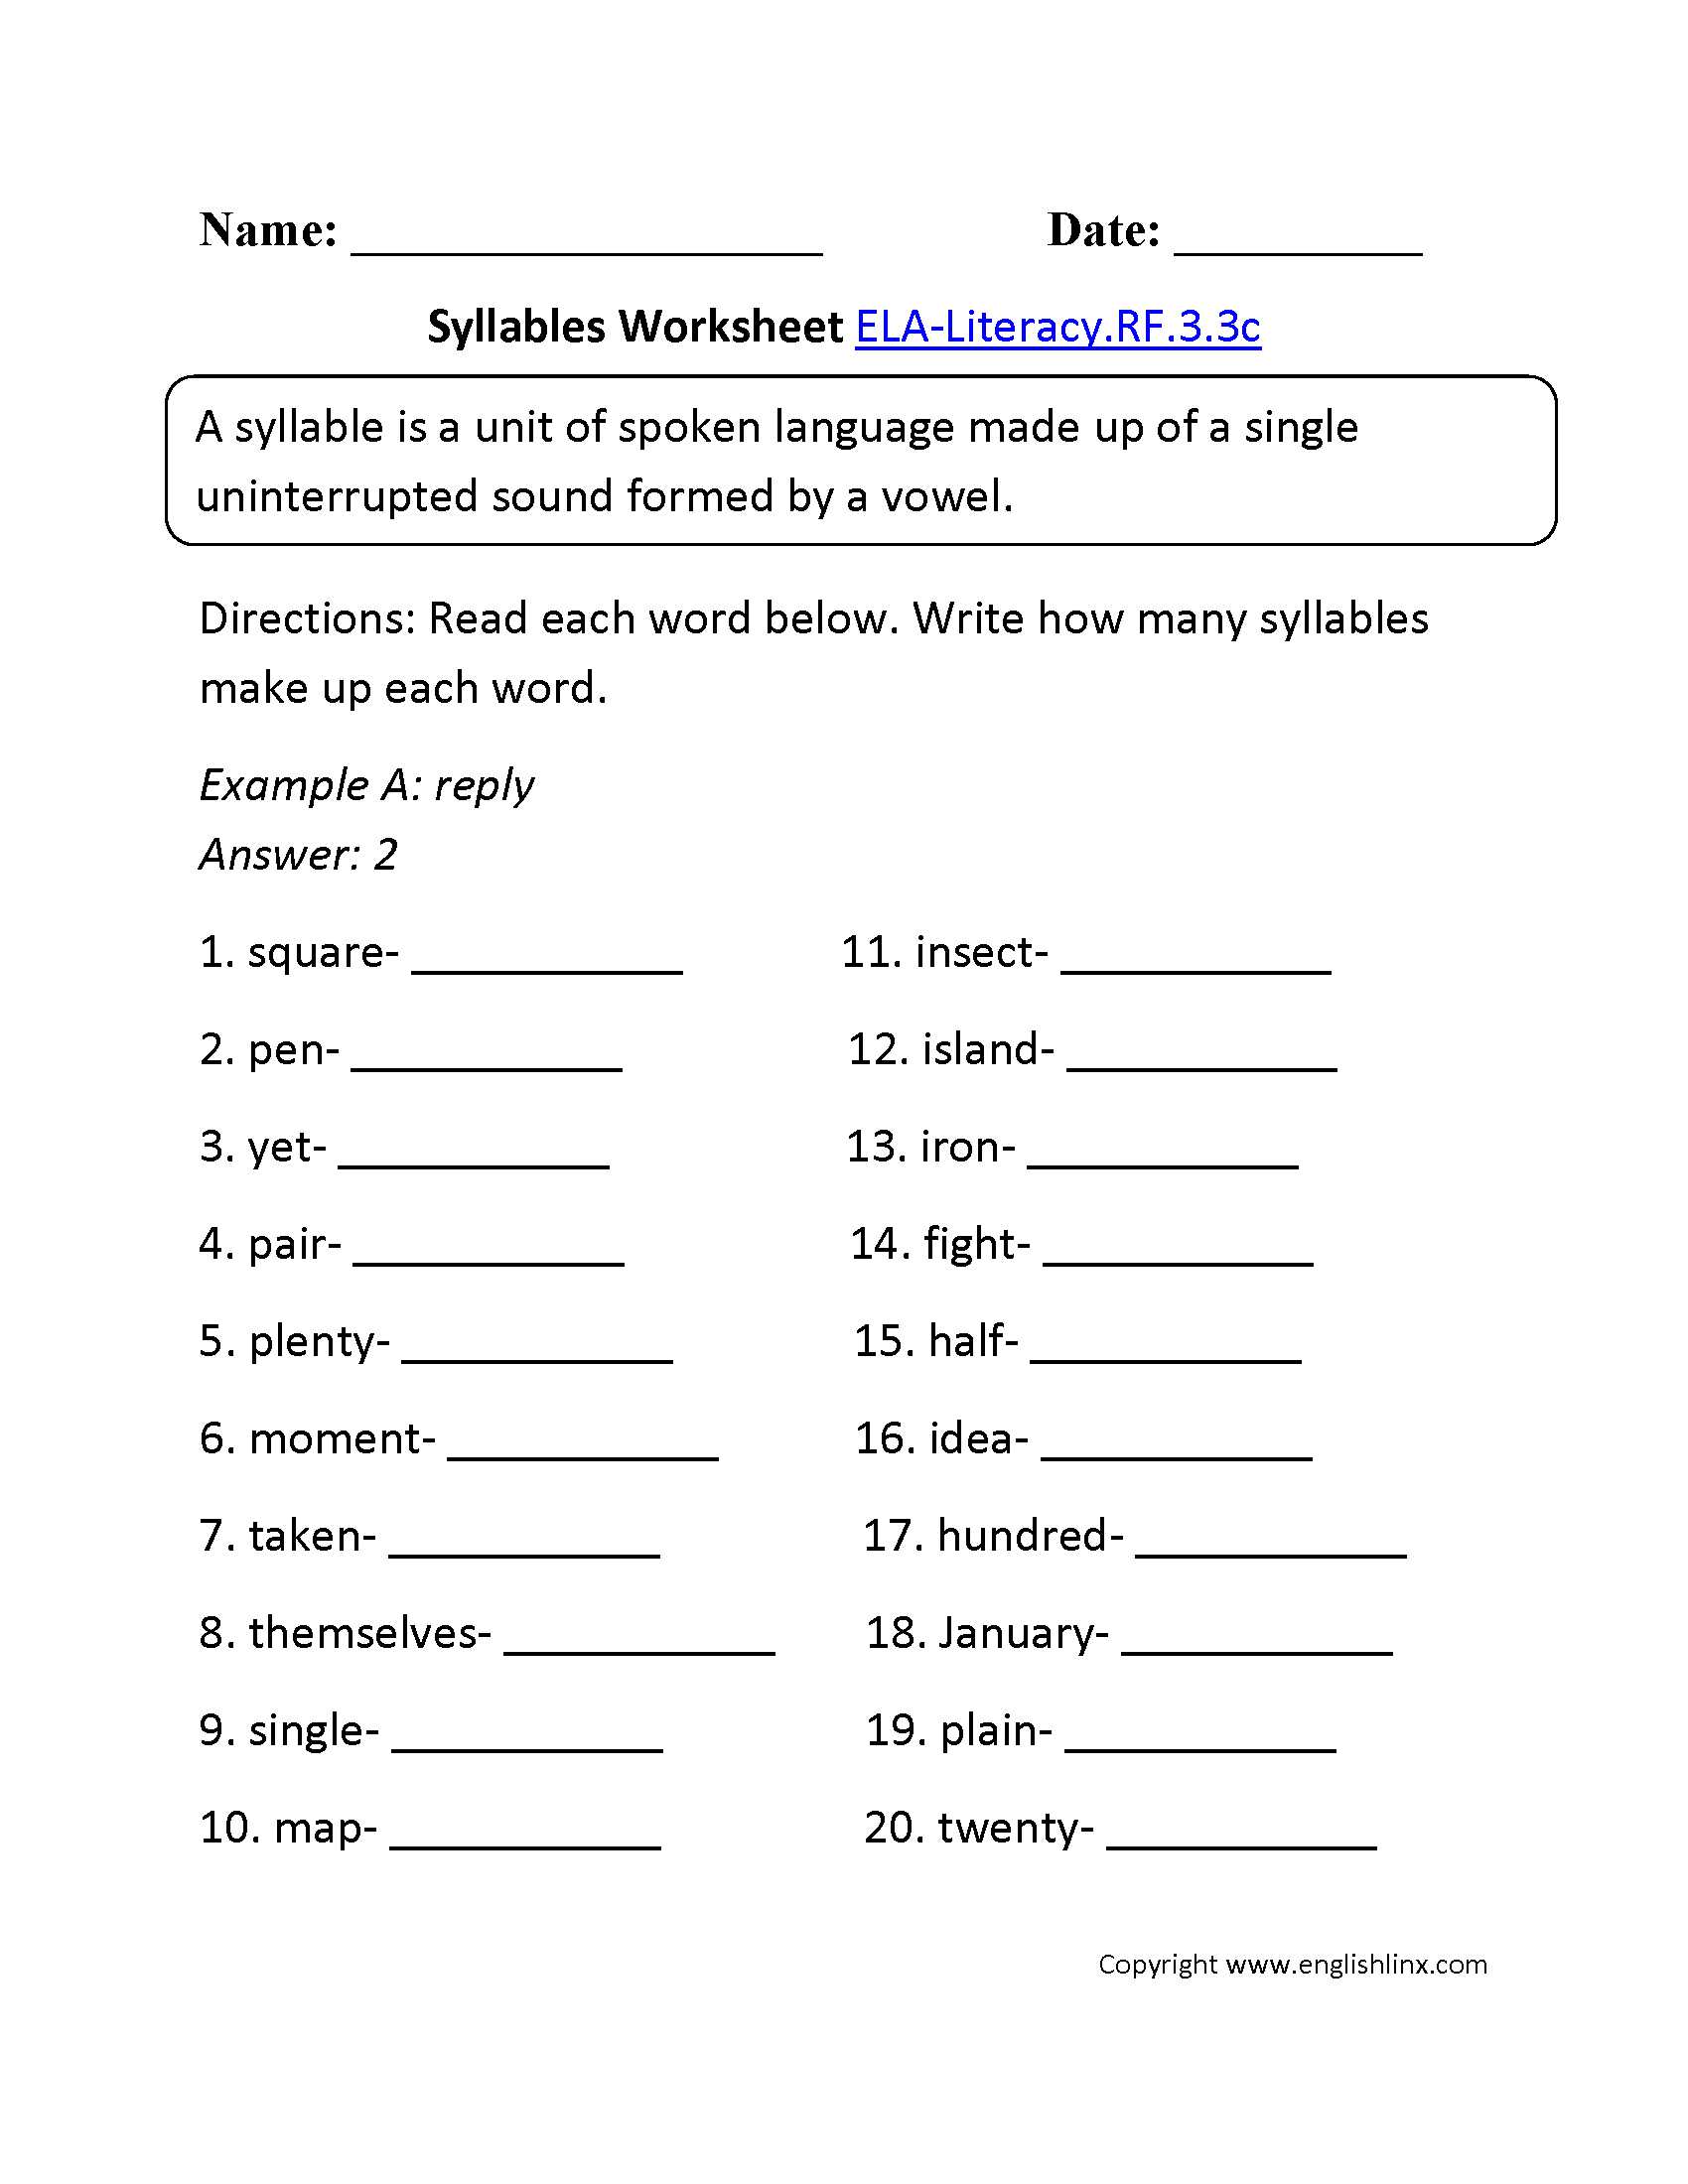 Syllables Worksheet 1 ELA-Literacy.RF.3.3c Reading Foundational Skills